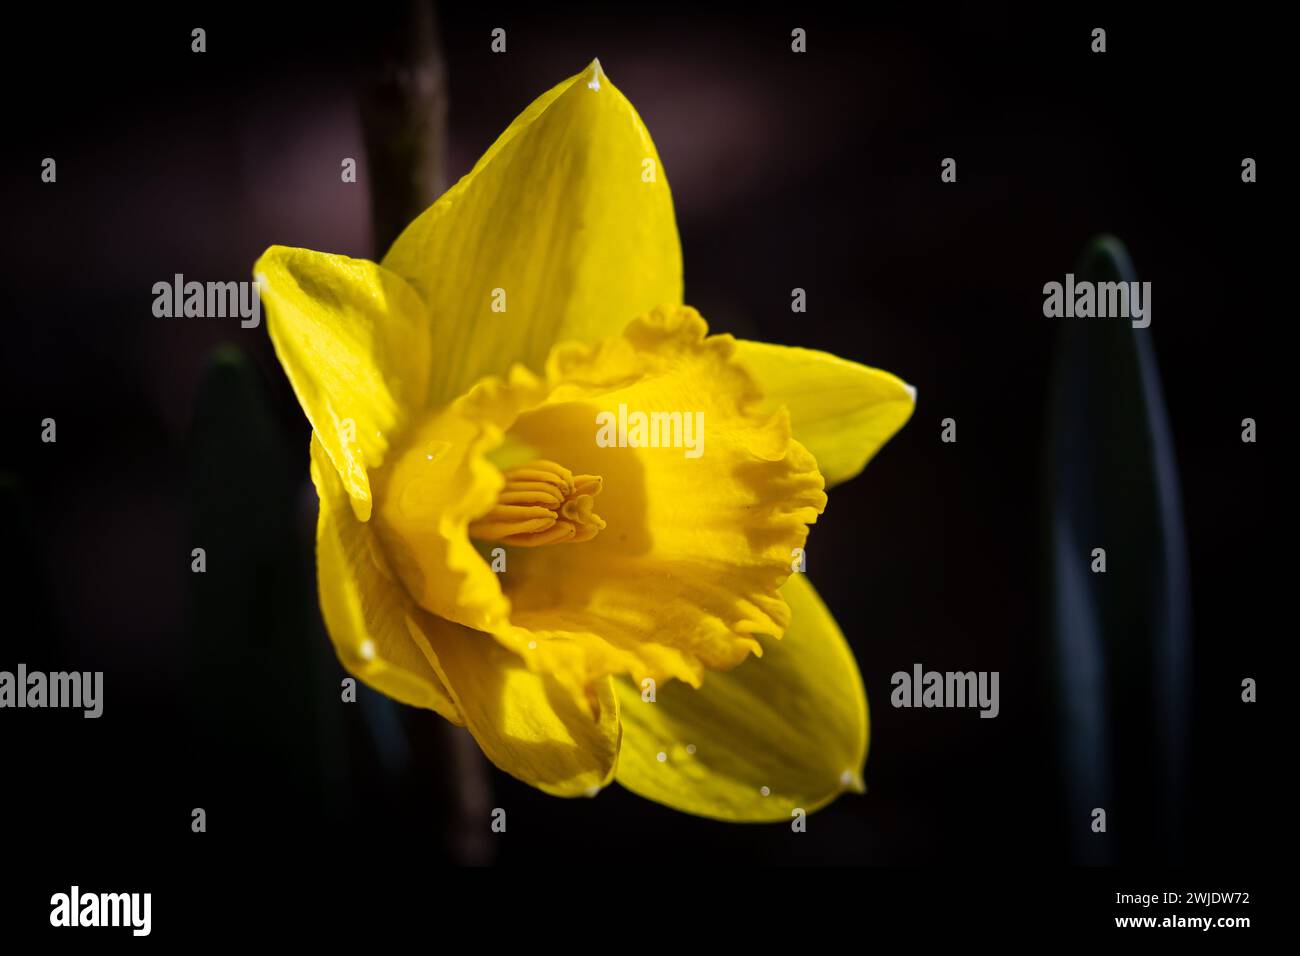 Yellow daffodil on dark background. Shallow depth of field. Stock Photo